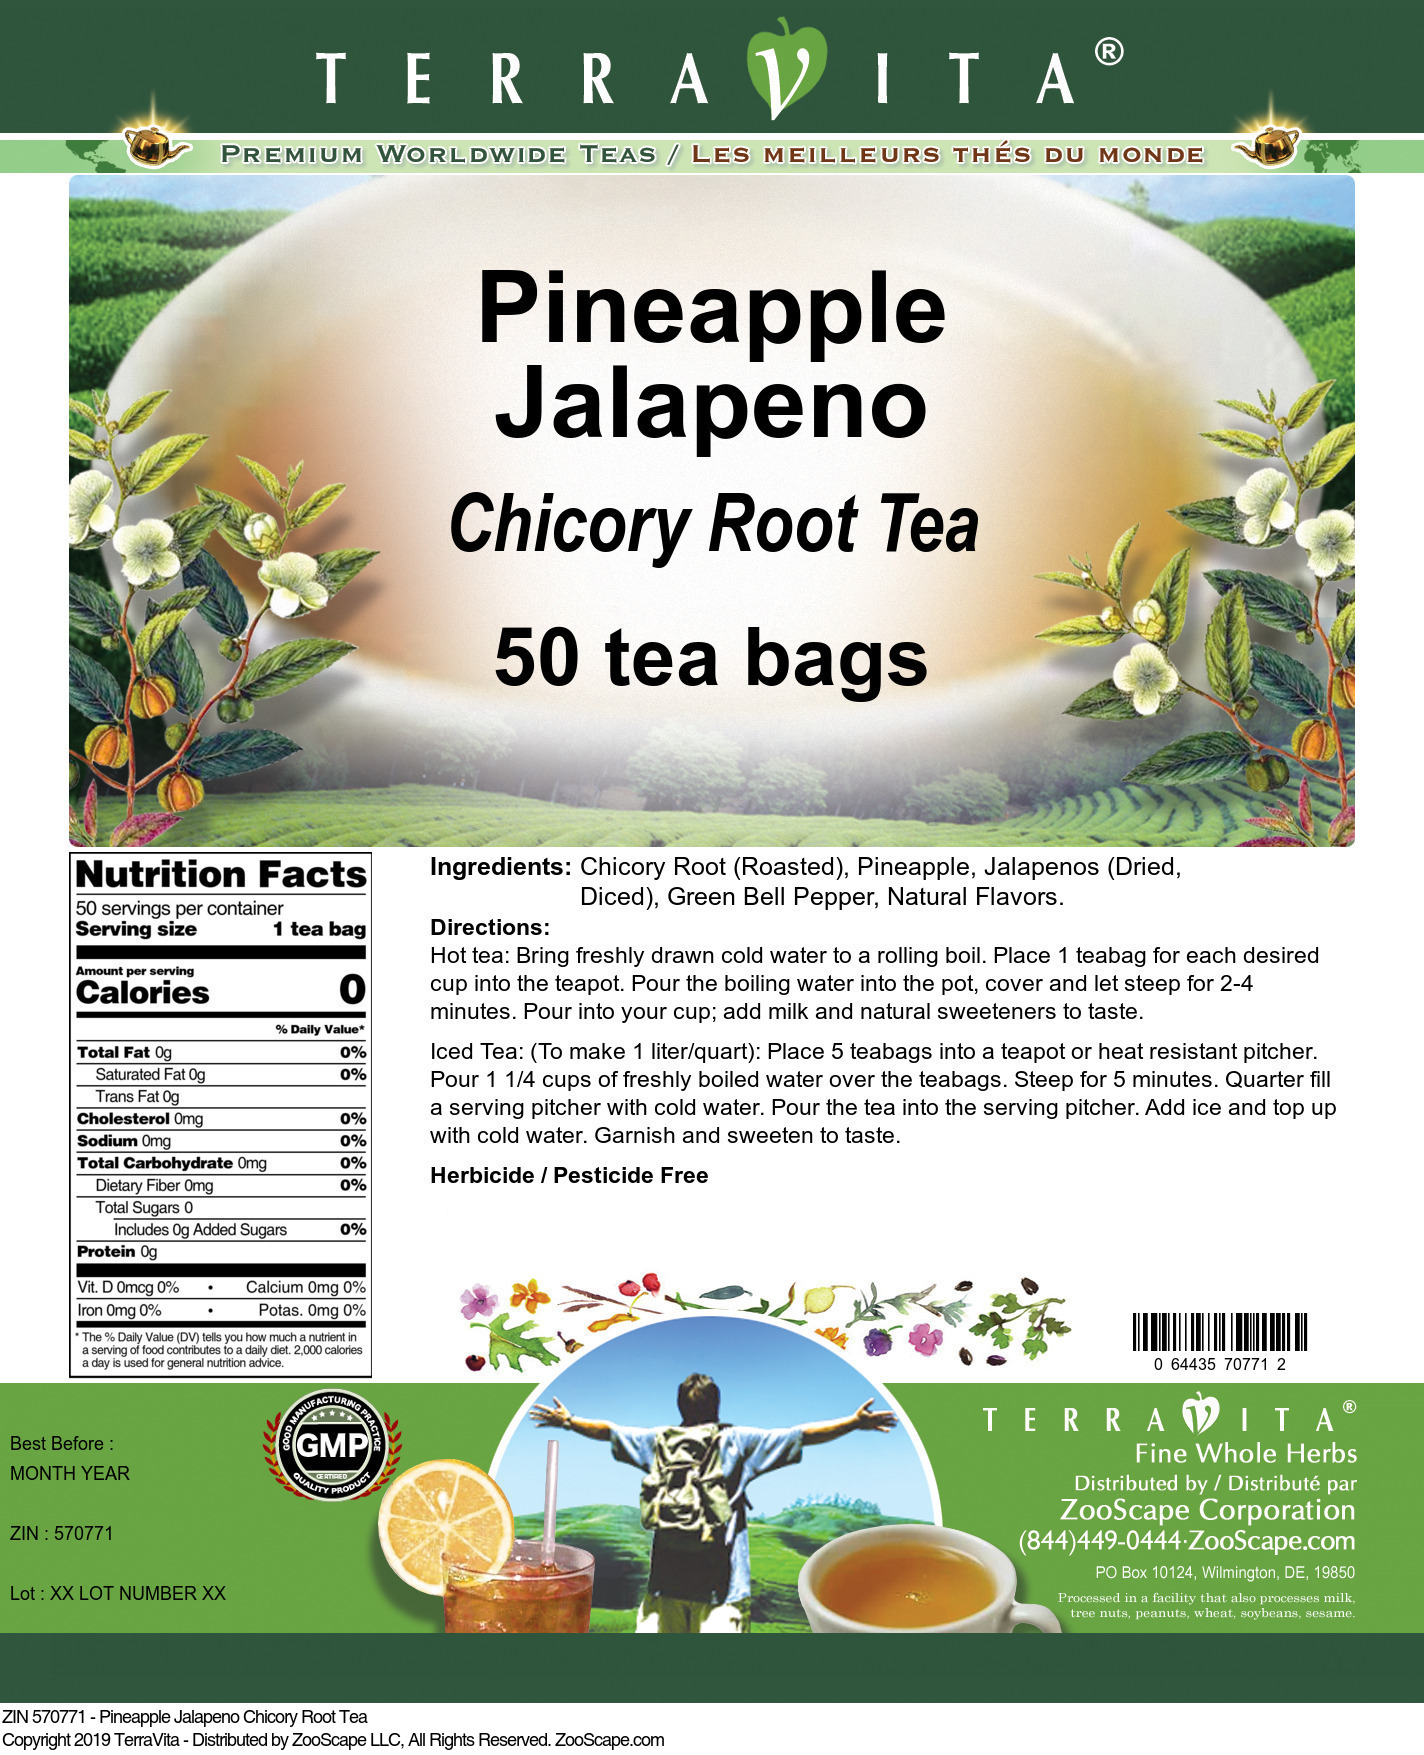 Pineapple Jalapeno Chicory Root Tea - Label